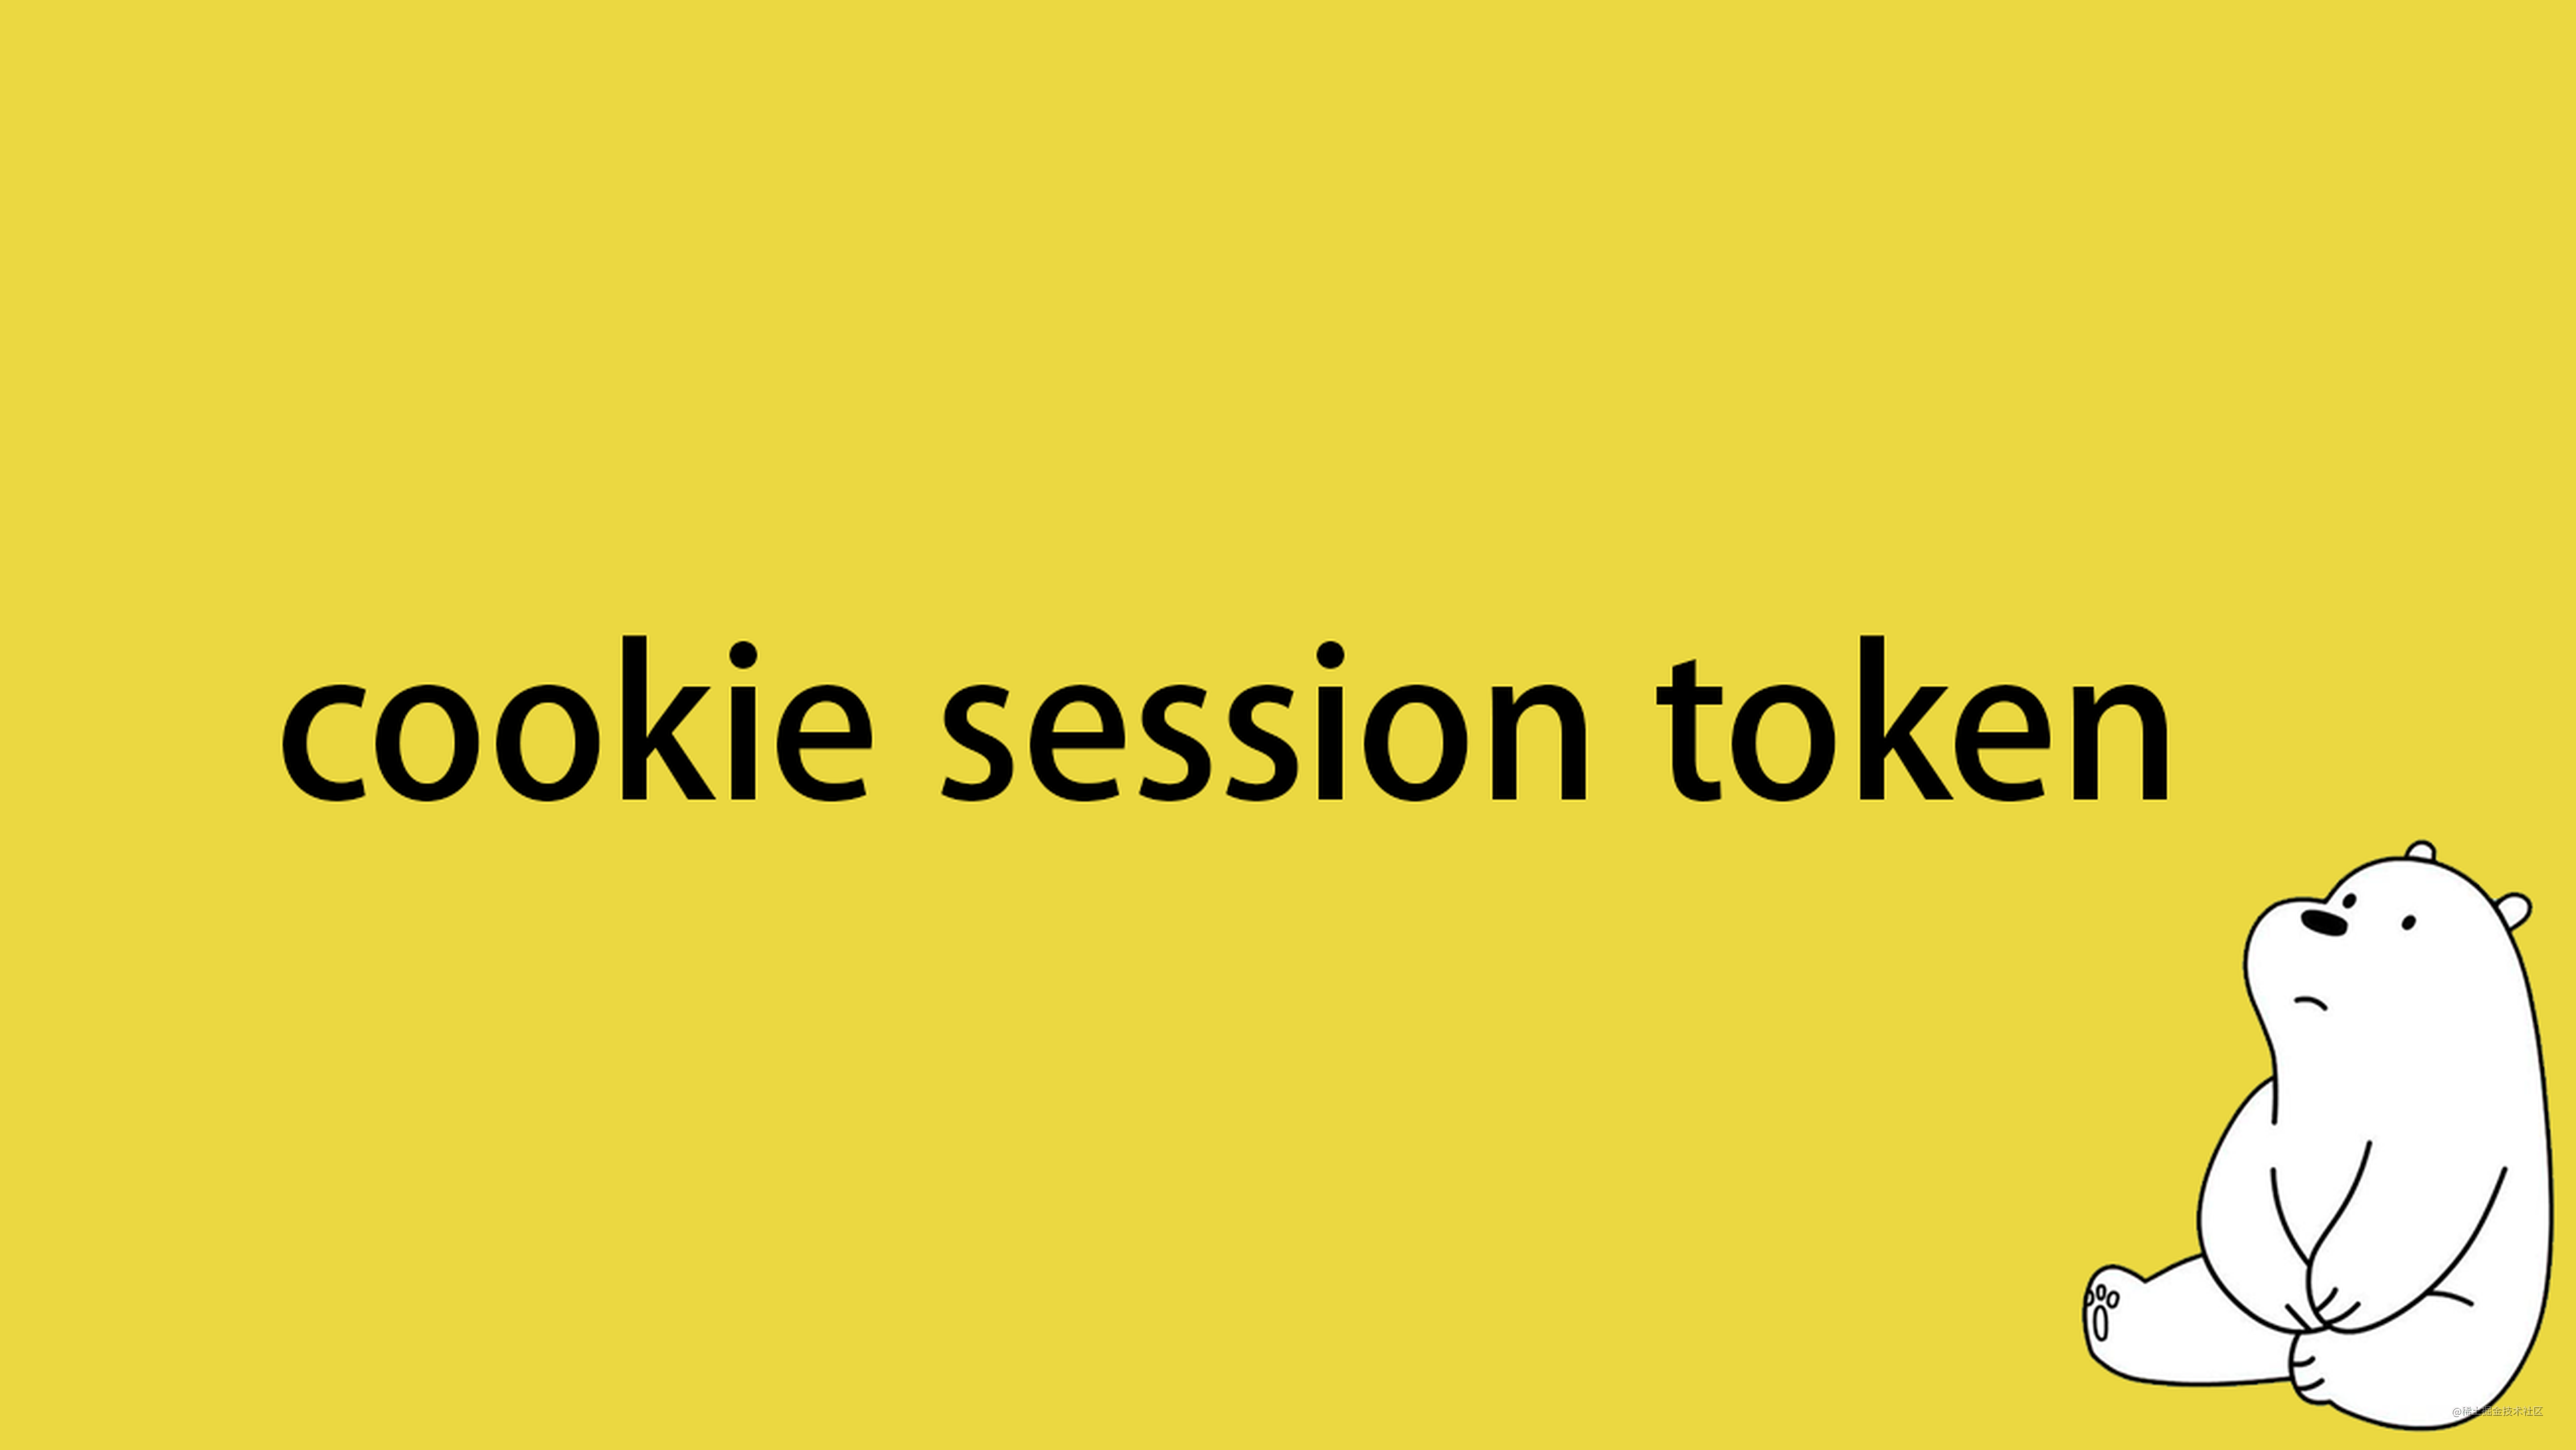 求你别再问我 什么是cookie、session、token了